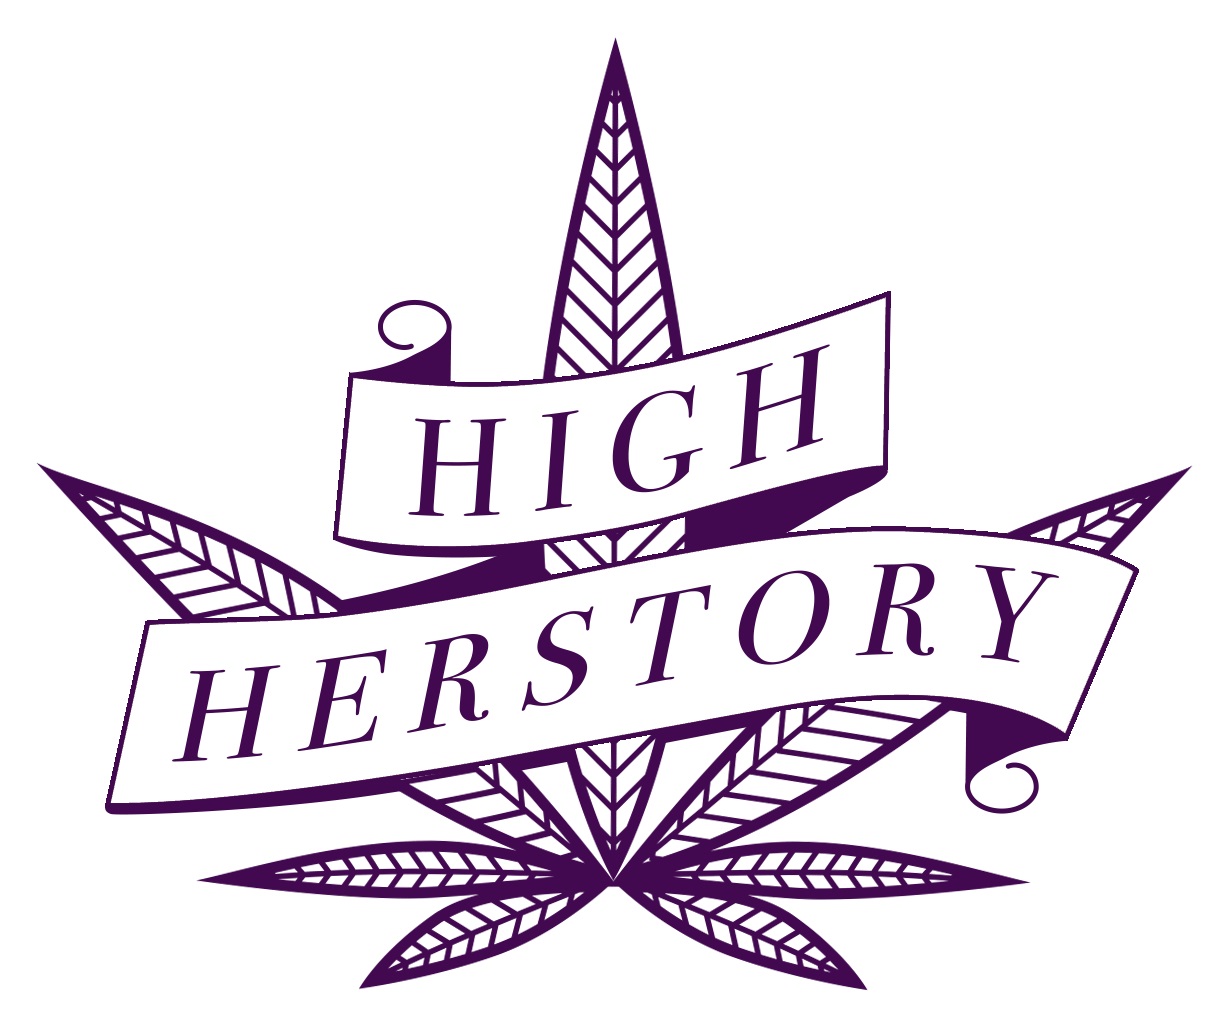 Highherstory